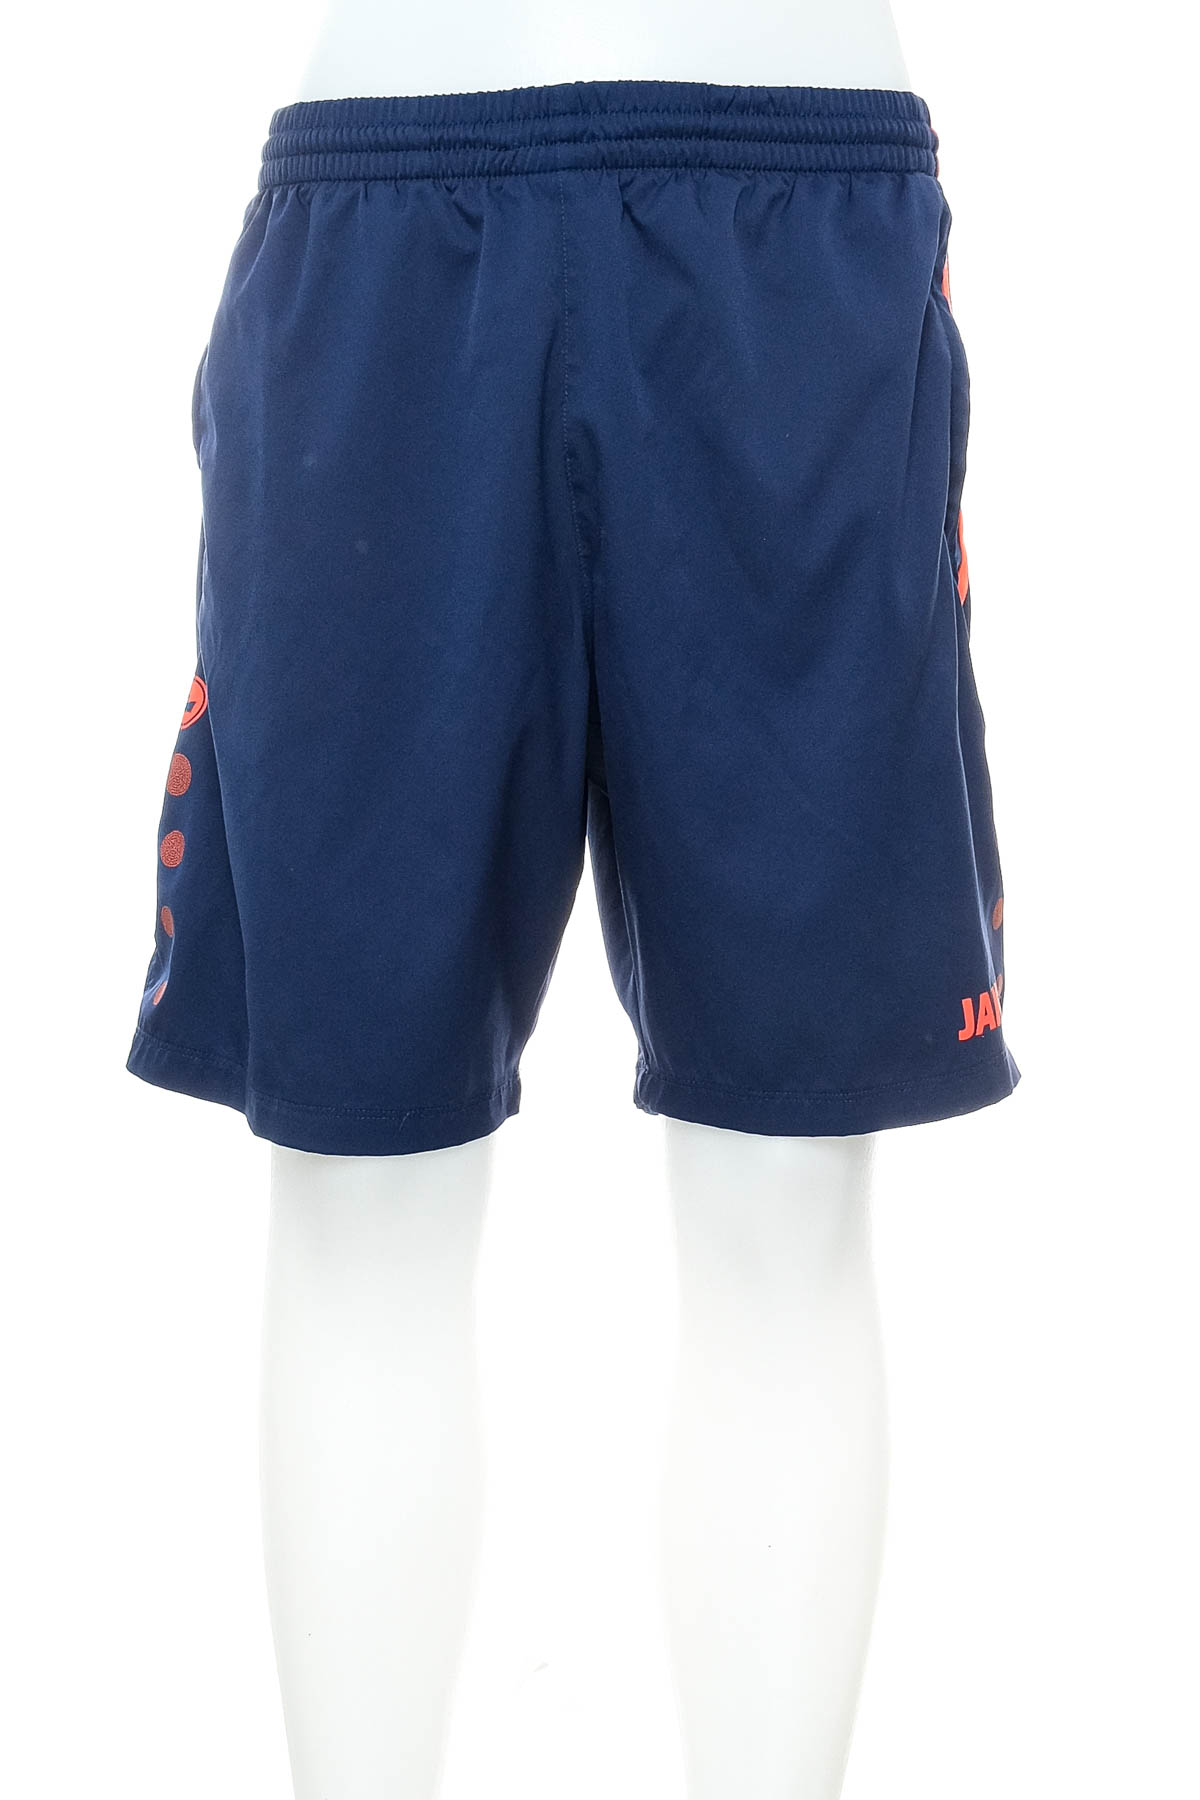 Men's shorts - Jako - 0